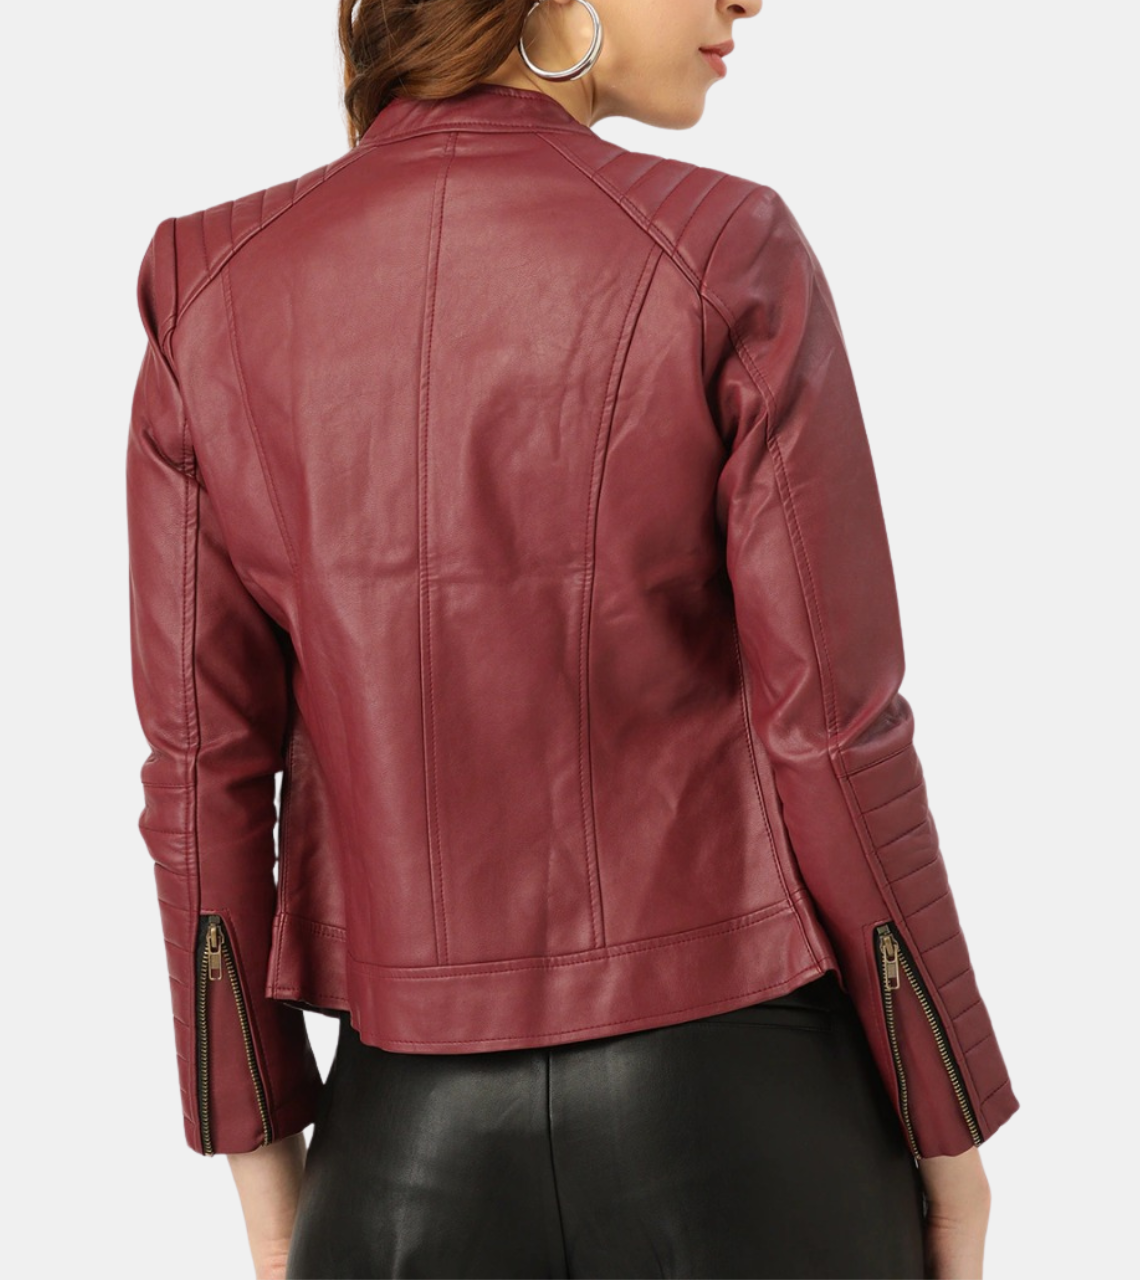  Aubrielle Women's Cherry Leather Jacket Back